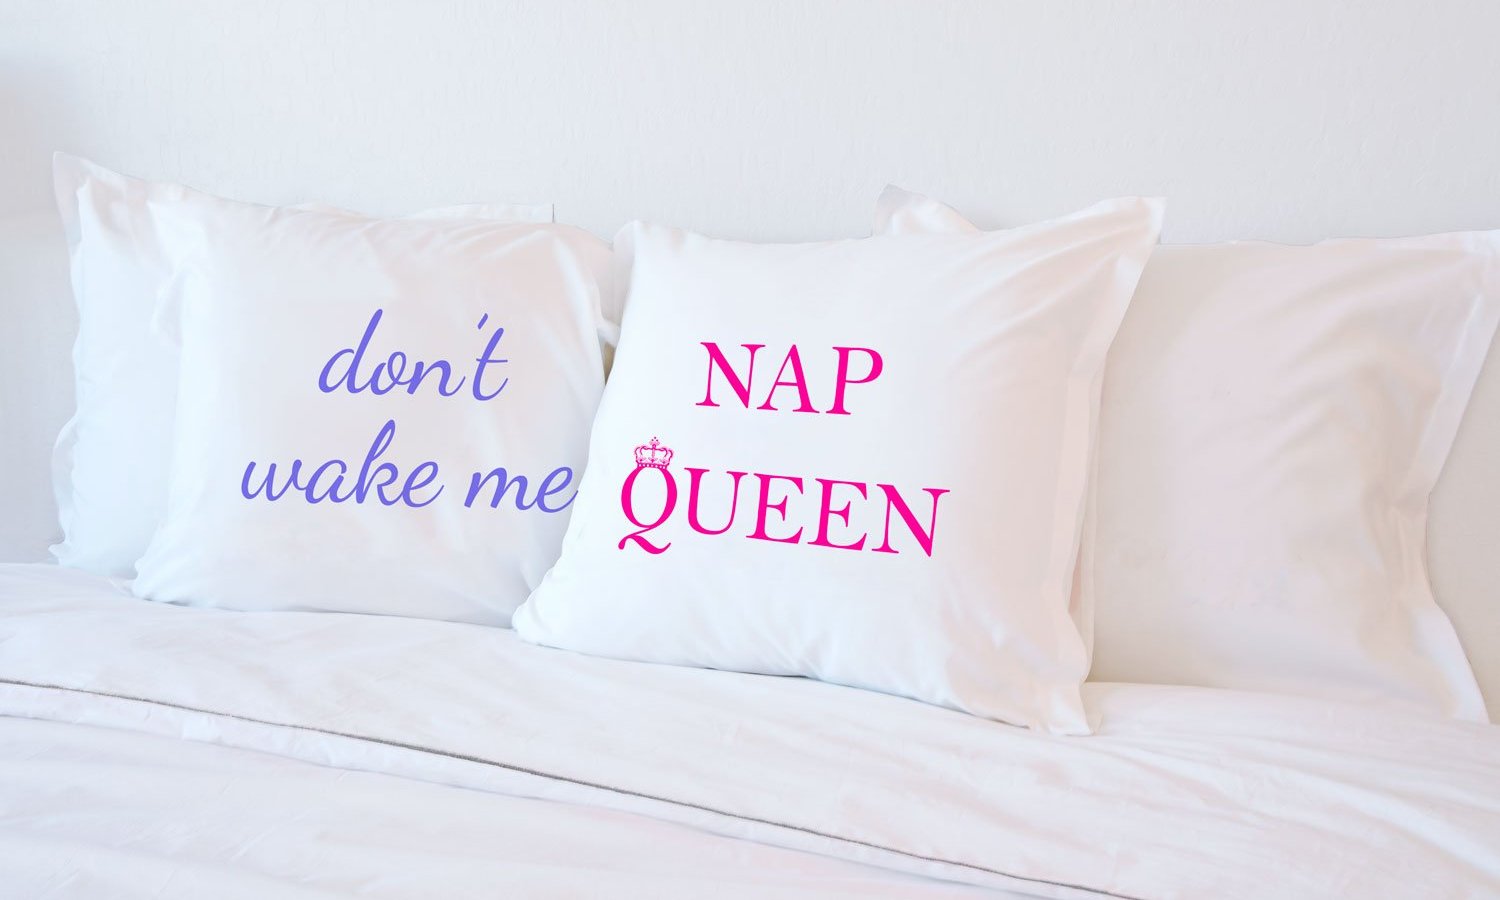 Nap Queen - Inspirational Quotes Pillowcase Collection-Di Lewis